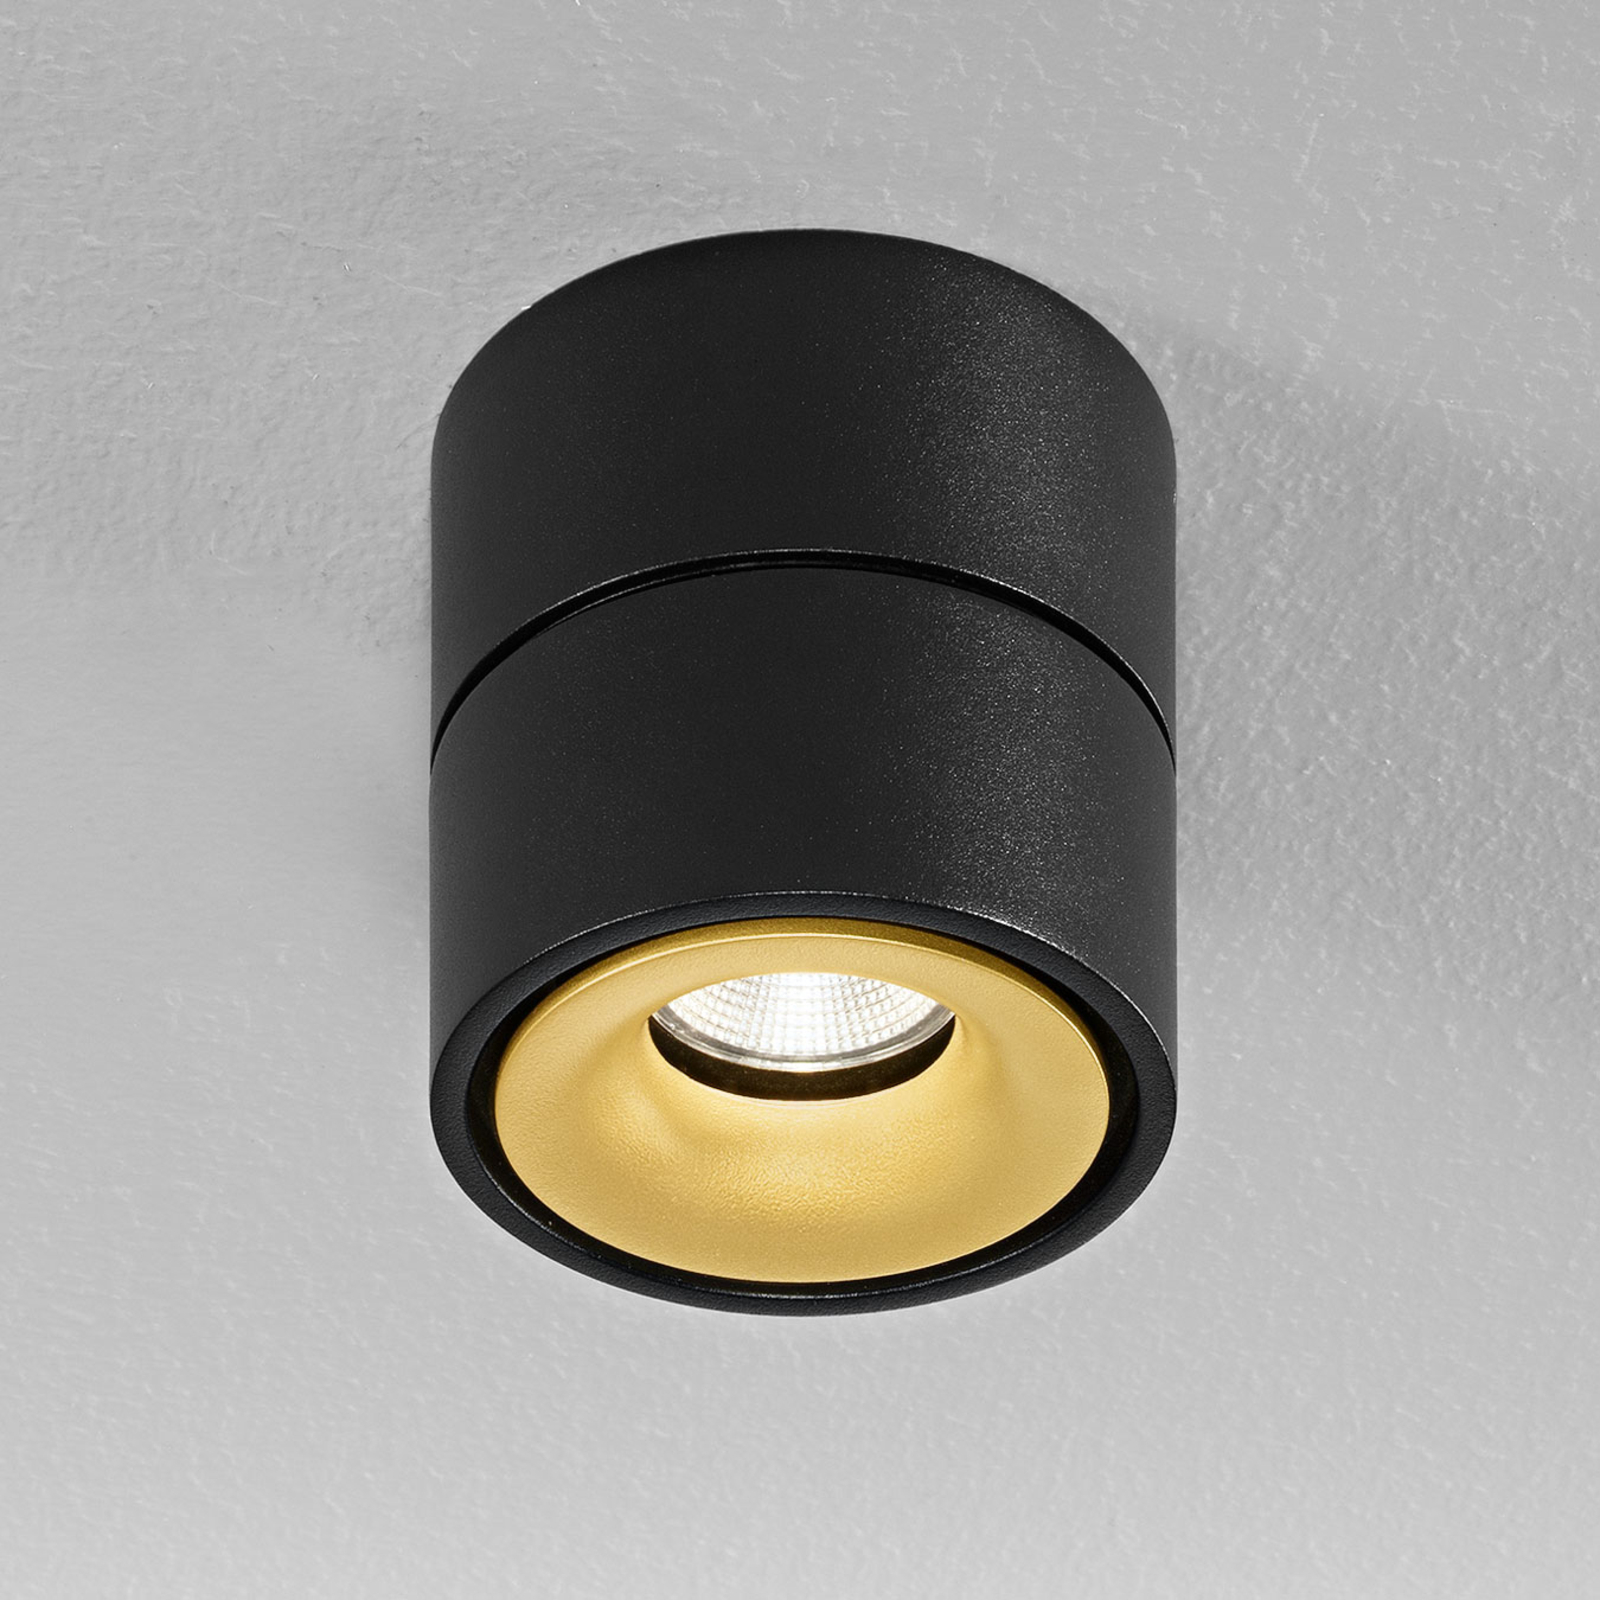 Egger Clippo spot plafond LED, noir-doré, 3 000 K